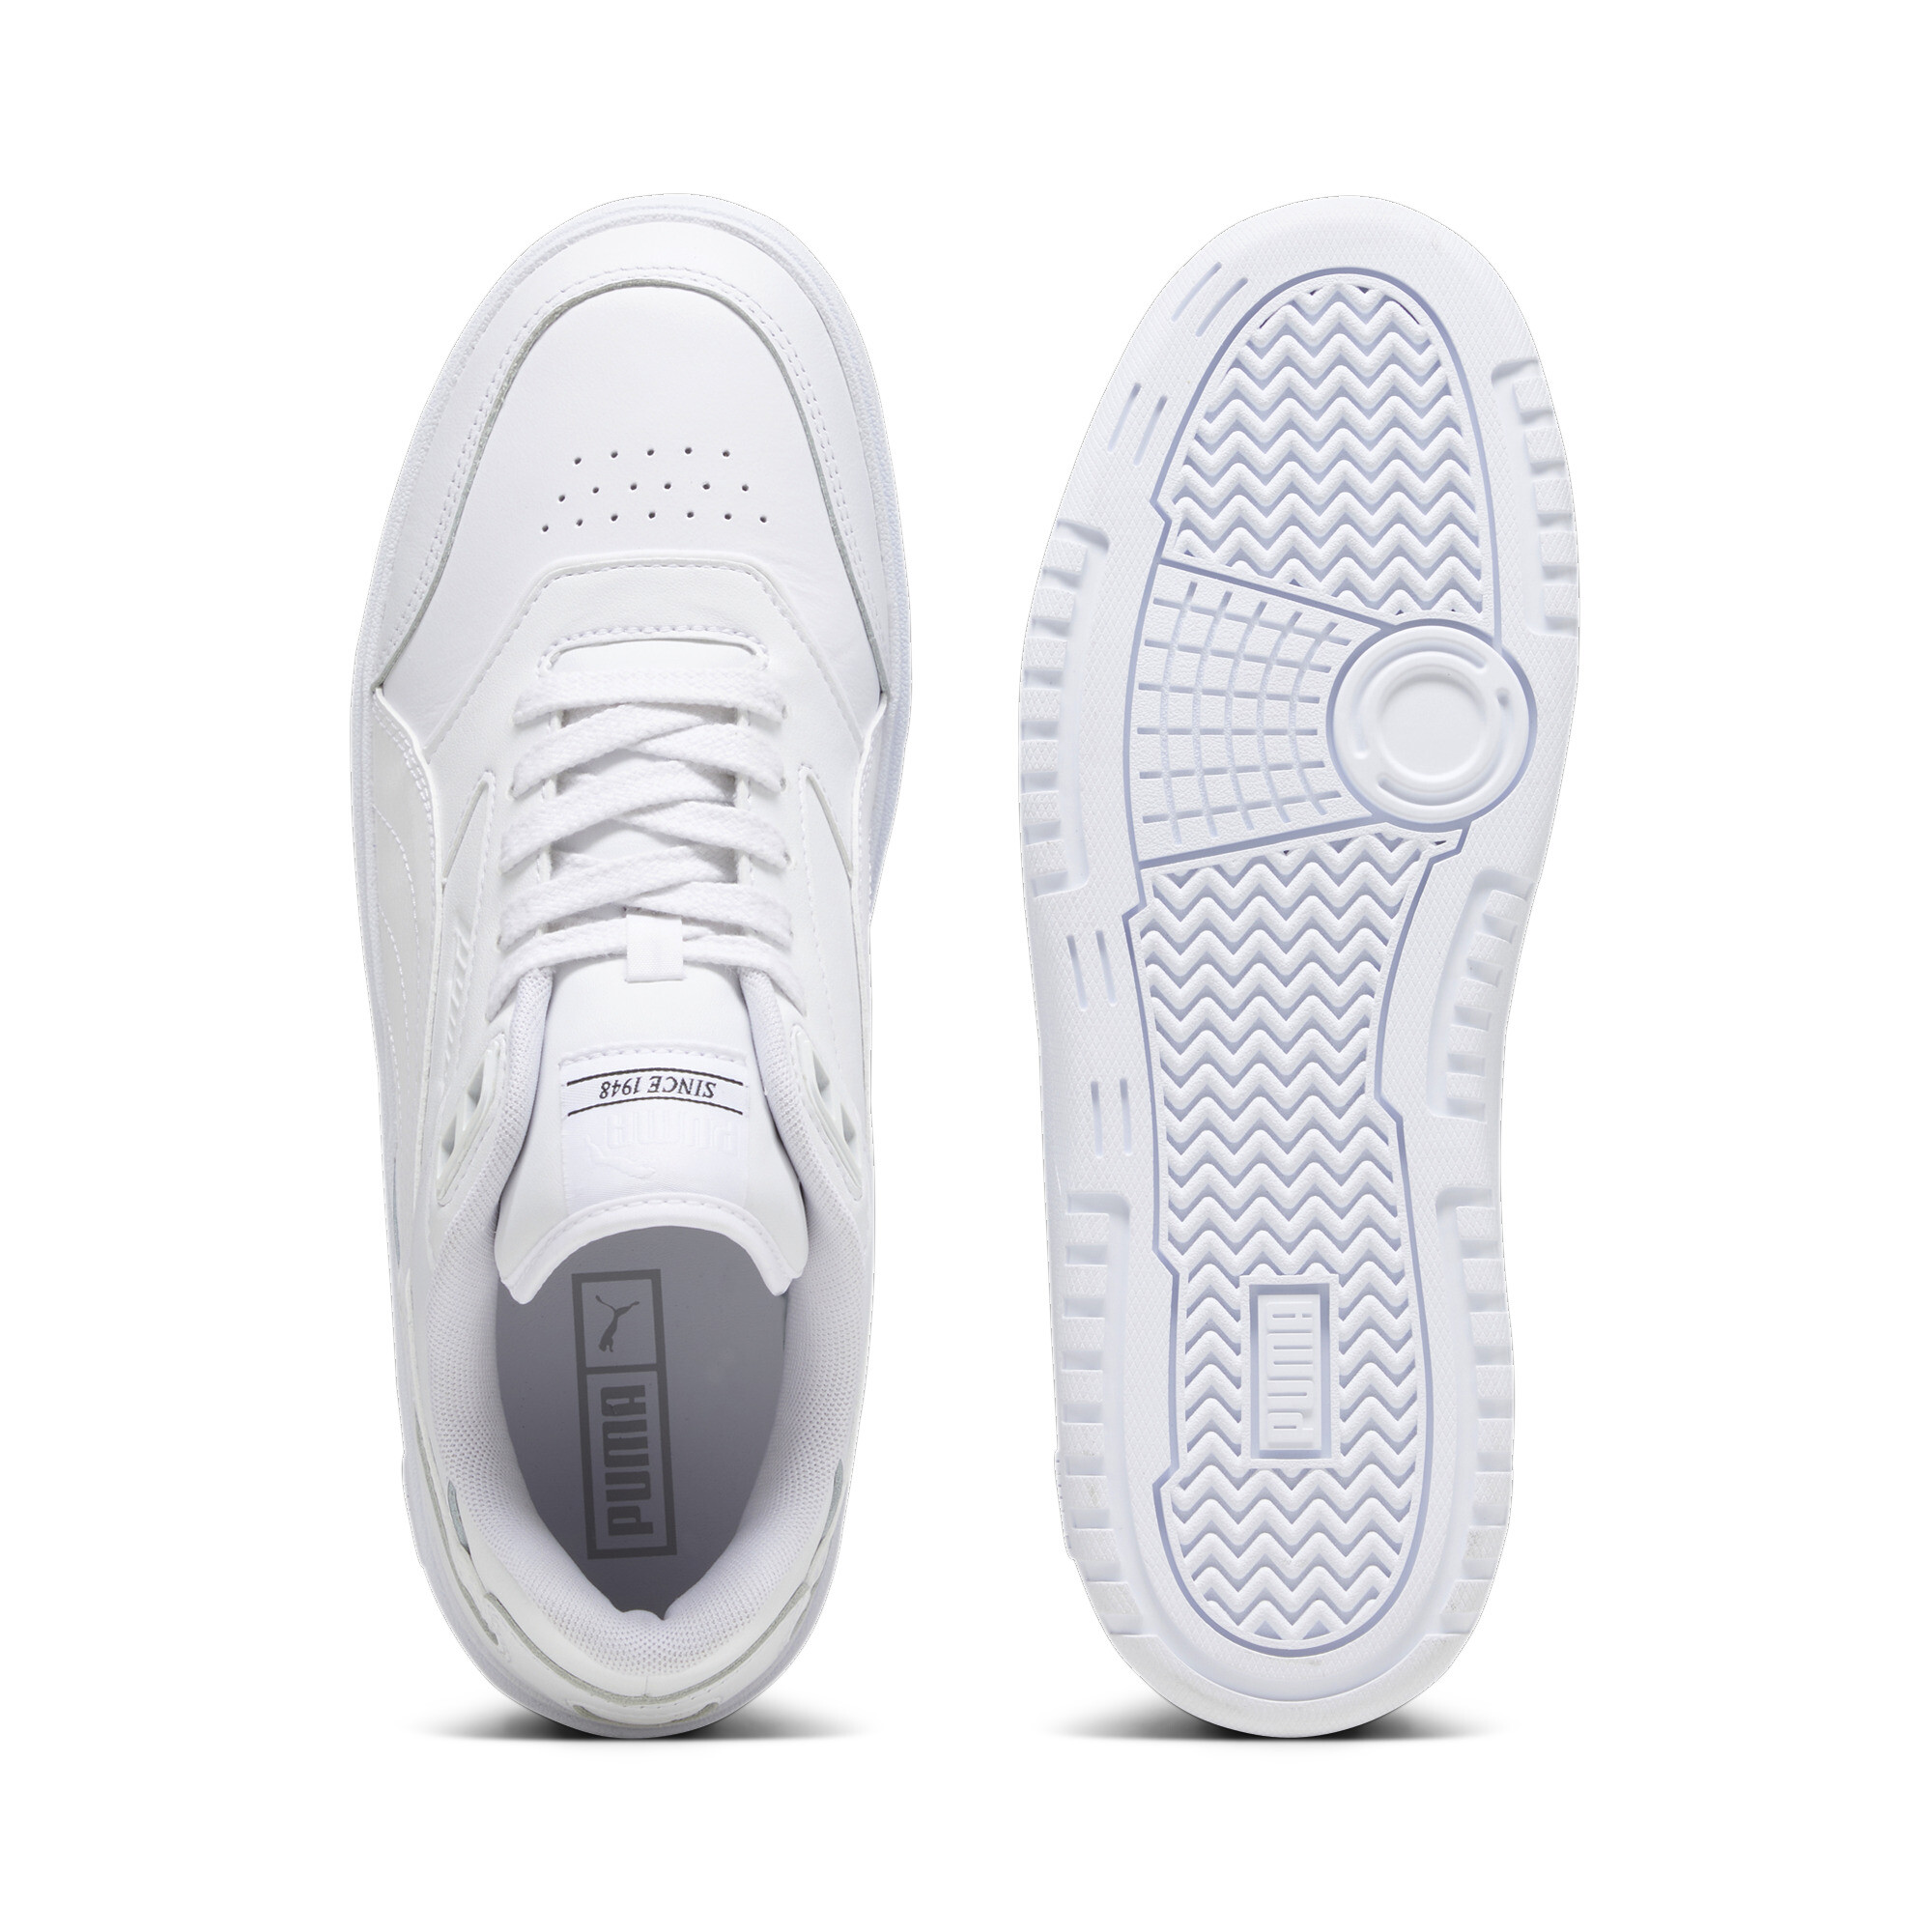 Men's PUMA Doublecourt Shoes In White, Size EU 40